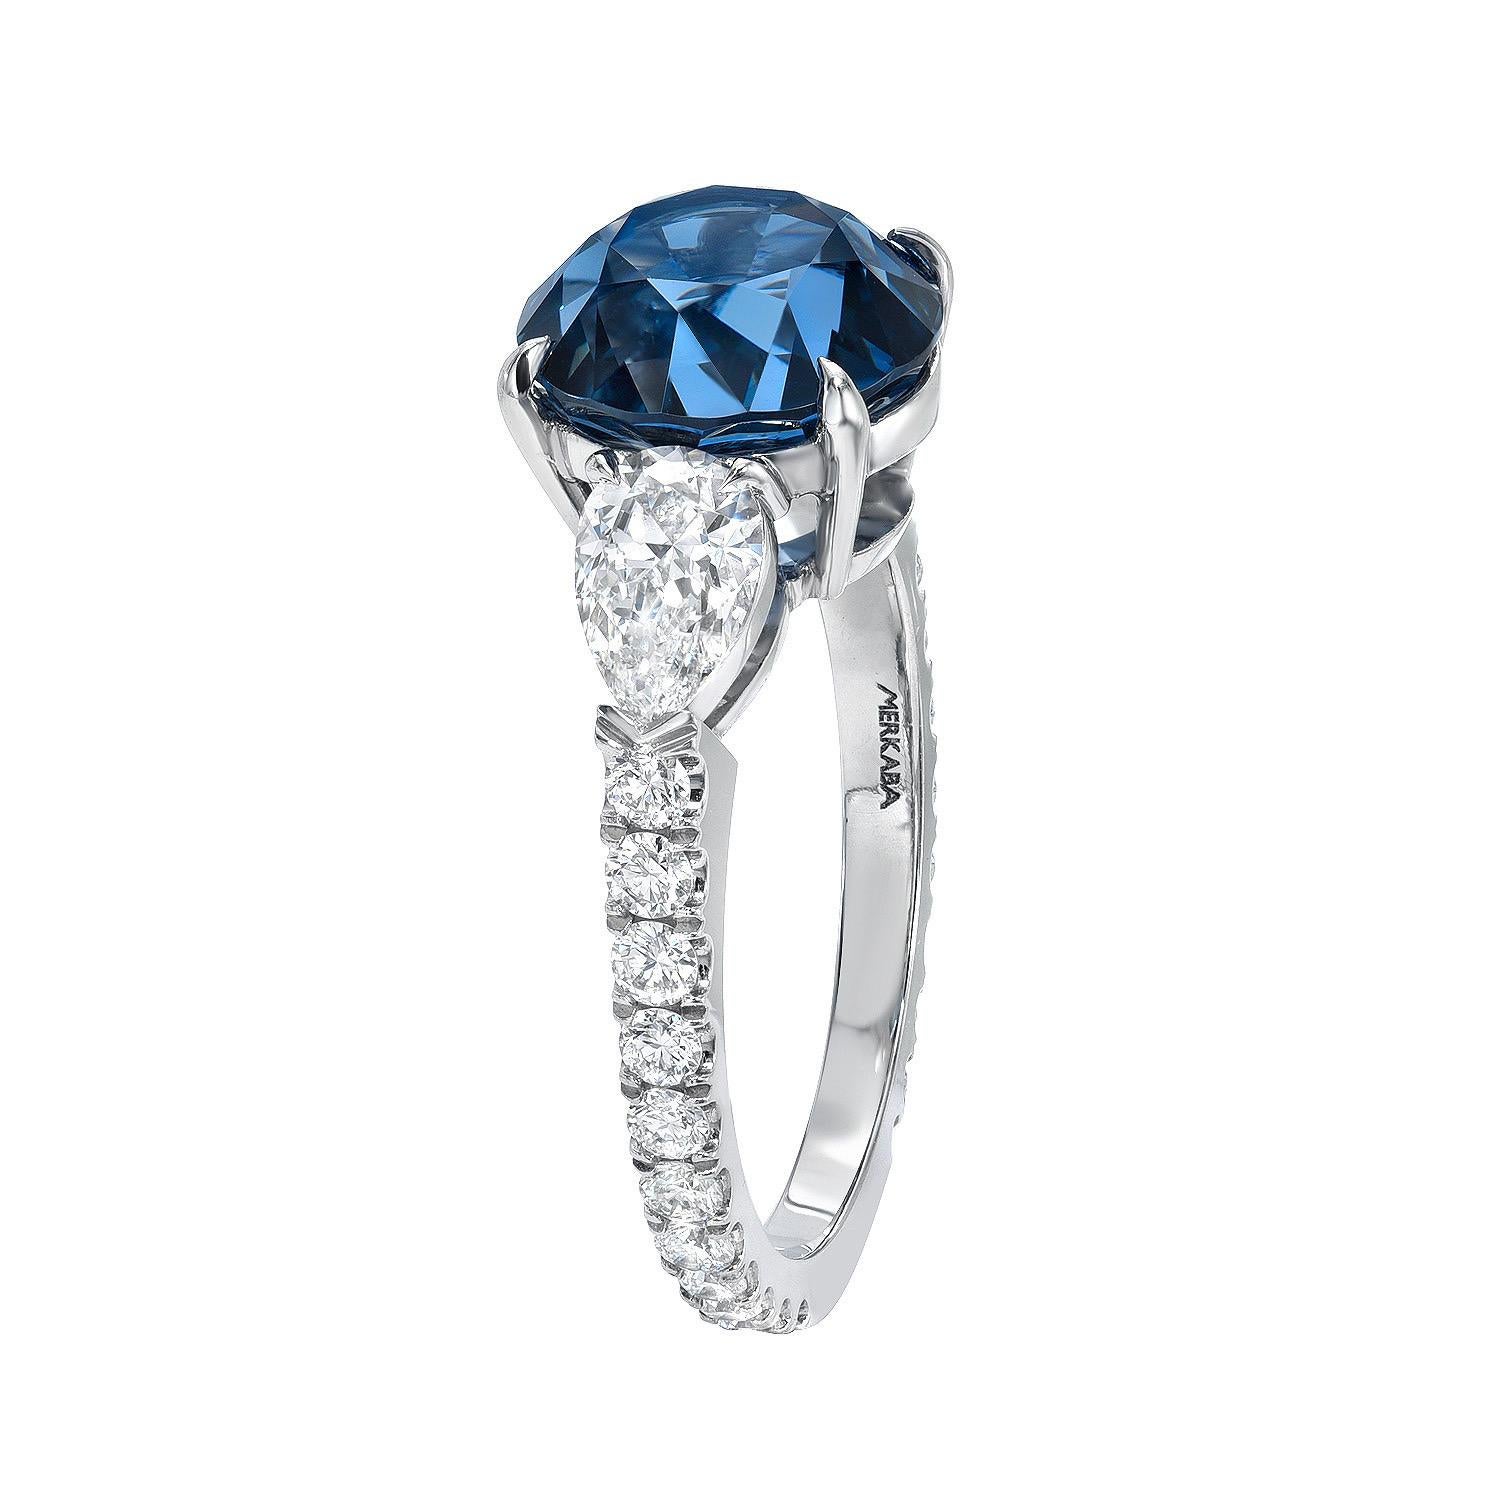 blue spinel jewelry